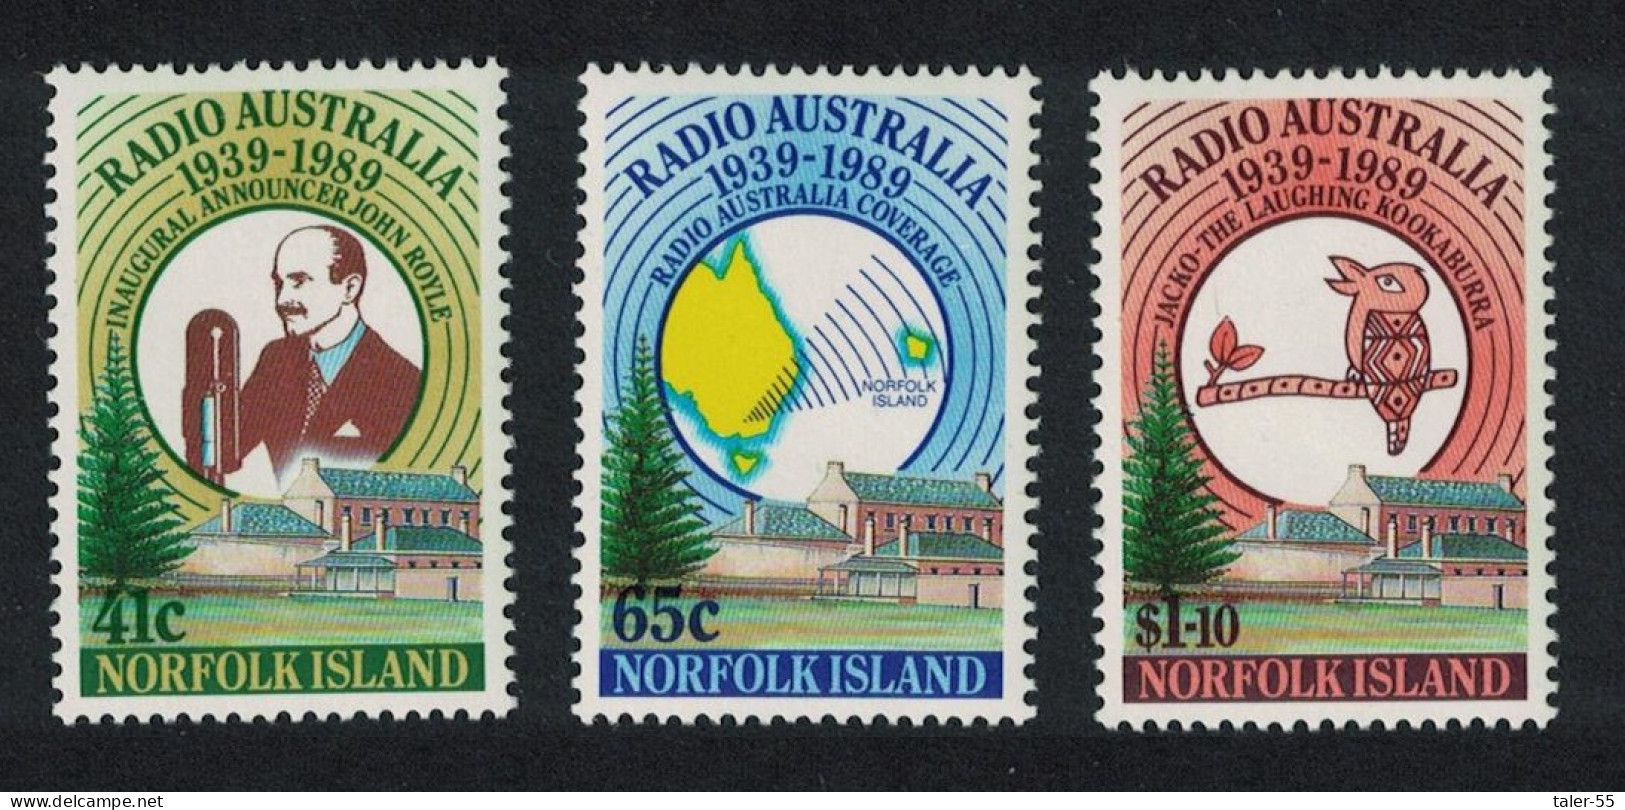 Norfolk Bird 50th Anniversary Of Radio Australia 3v 1989 MNH SG#474-476 Sc#466-468 - Norfolkinsel